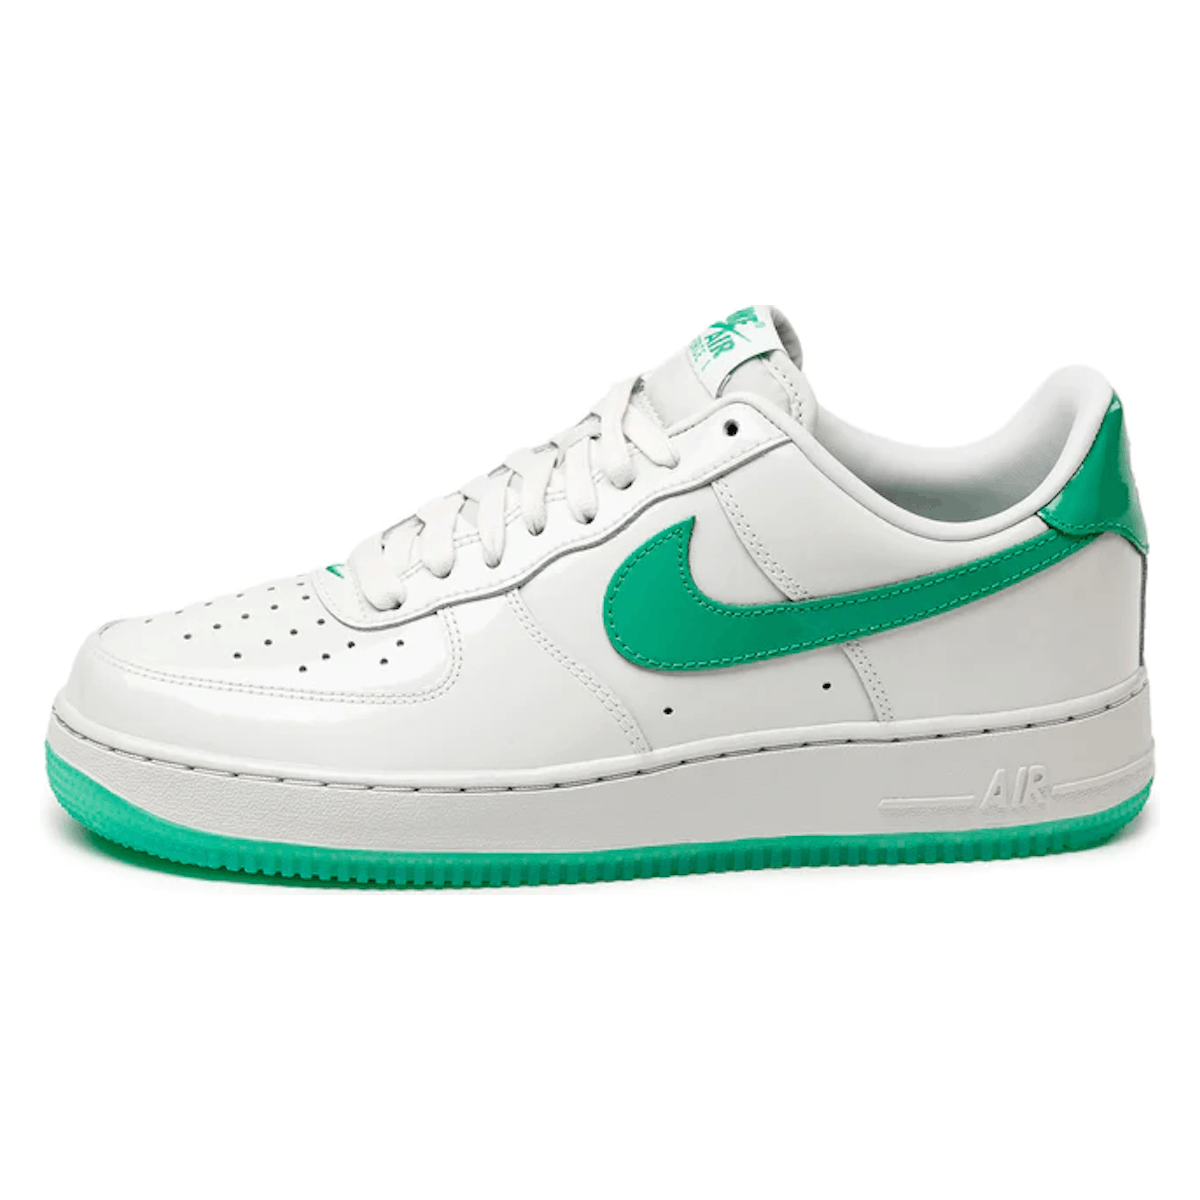 Nike Air Force 1 '07 Premium "Stadium Green"